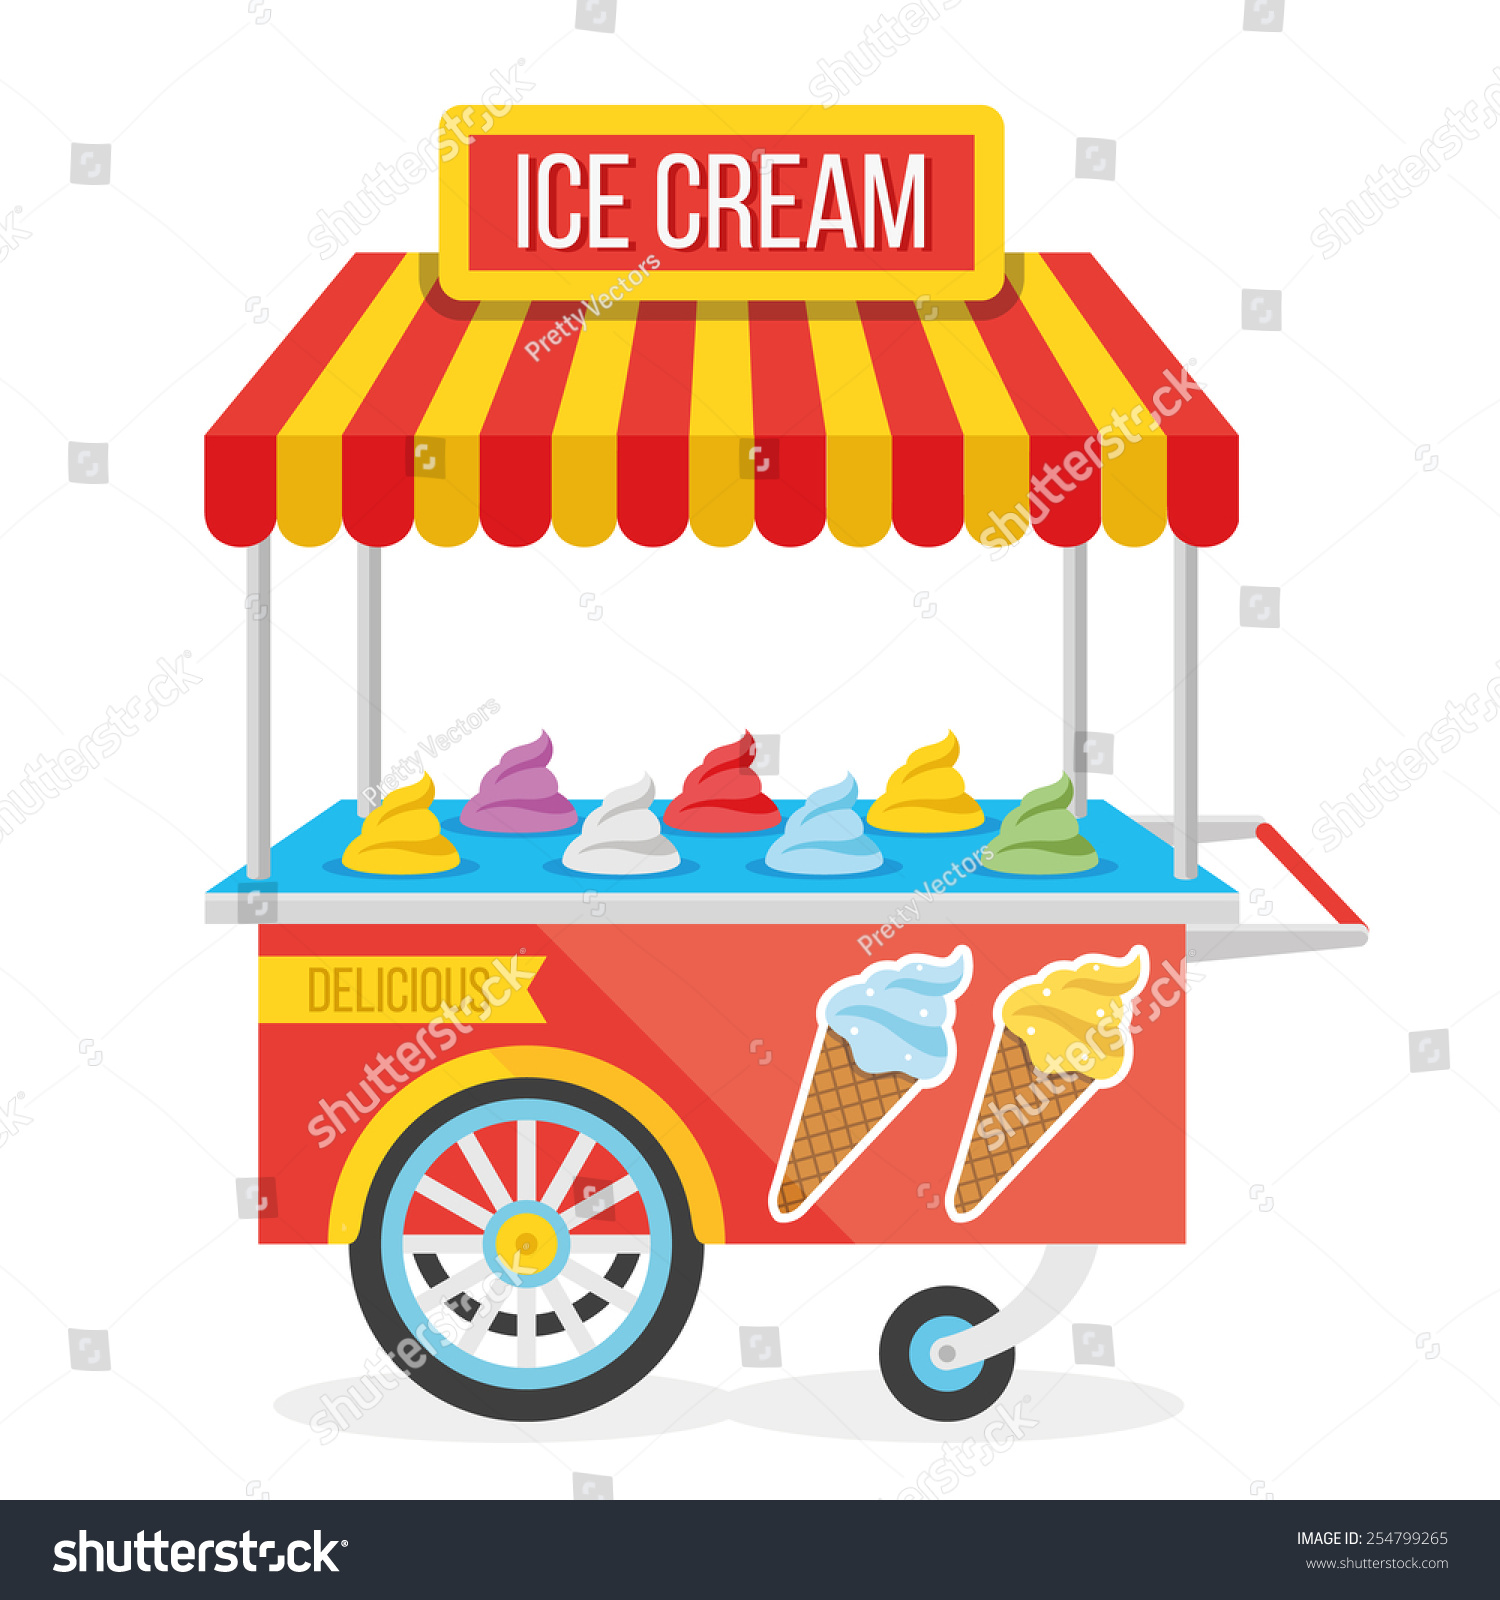 ice cream stand clipart - photo #47